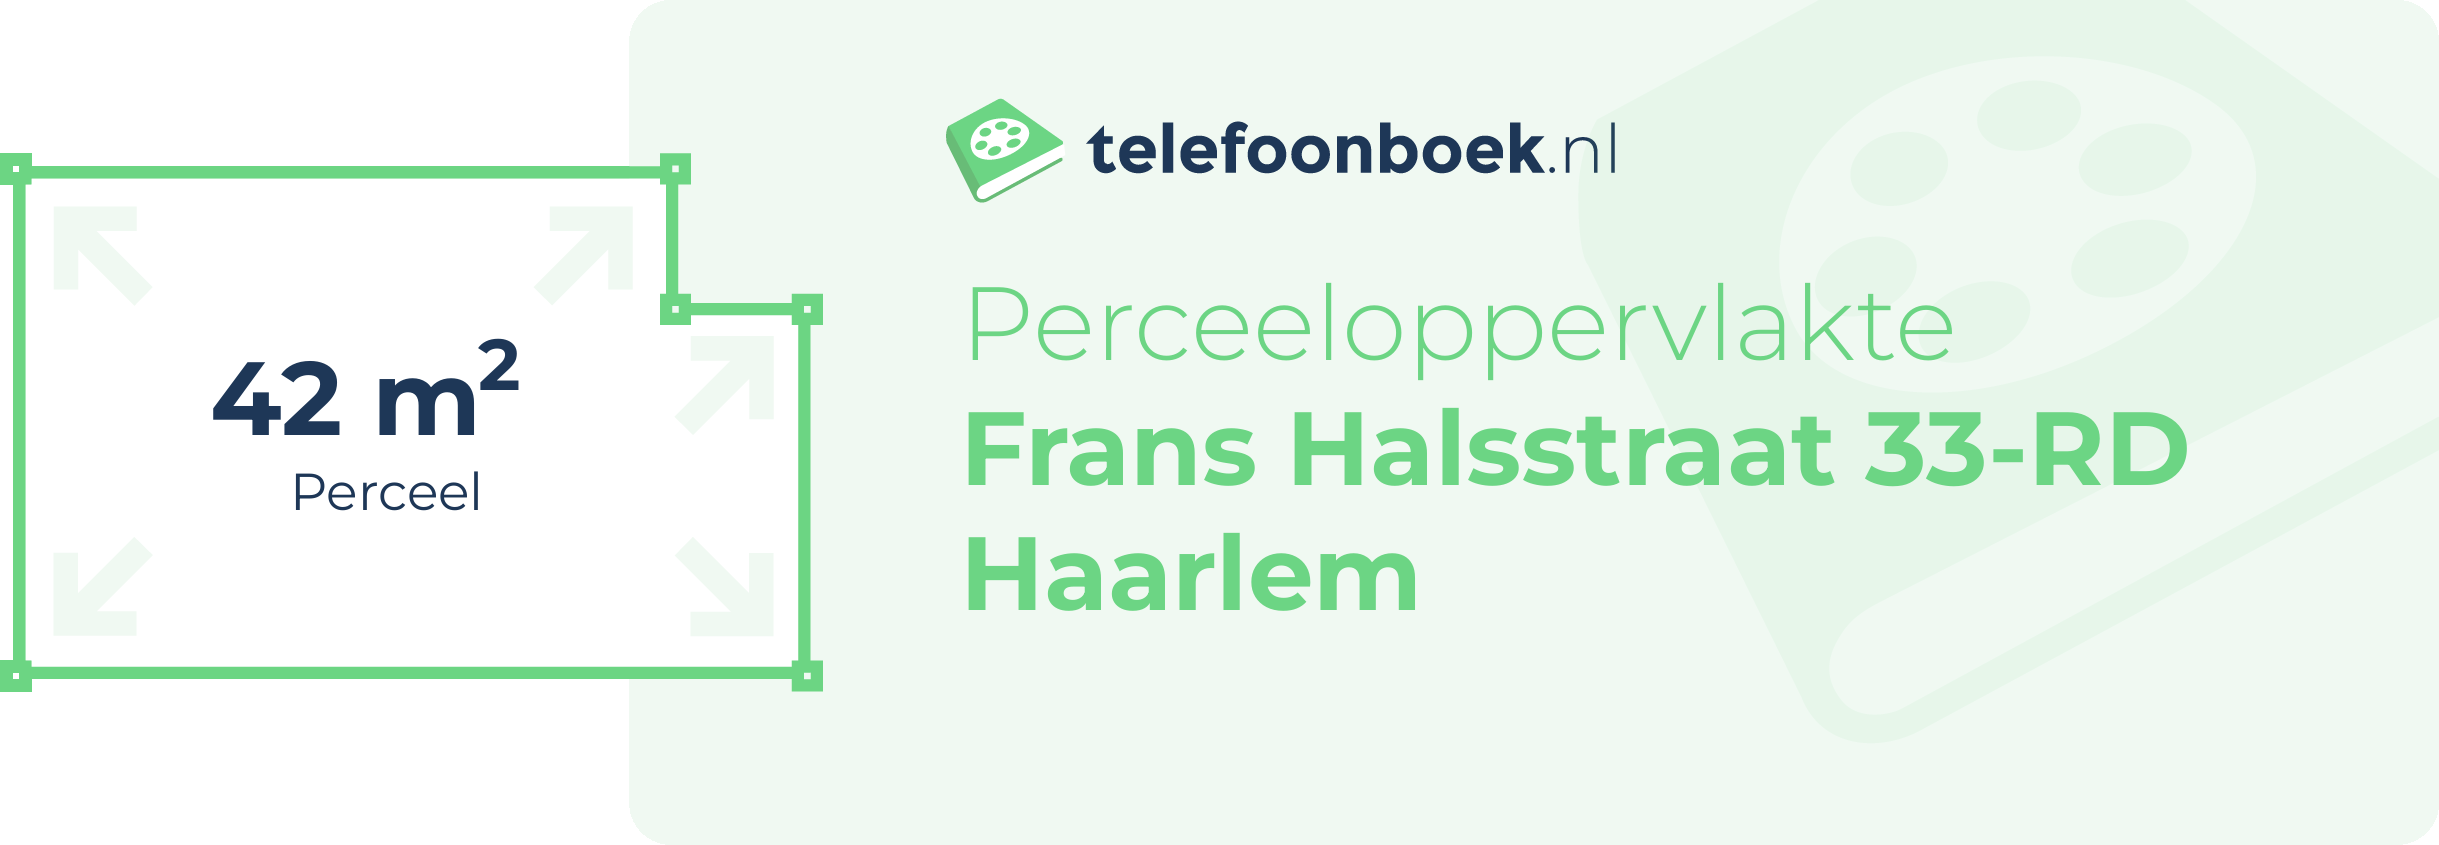 Perceeloppervlakte Frans Halsstraat 33-RD Haarlem